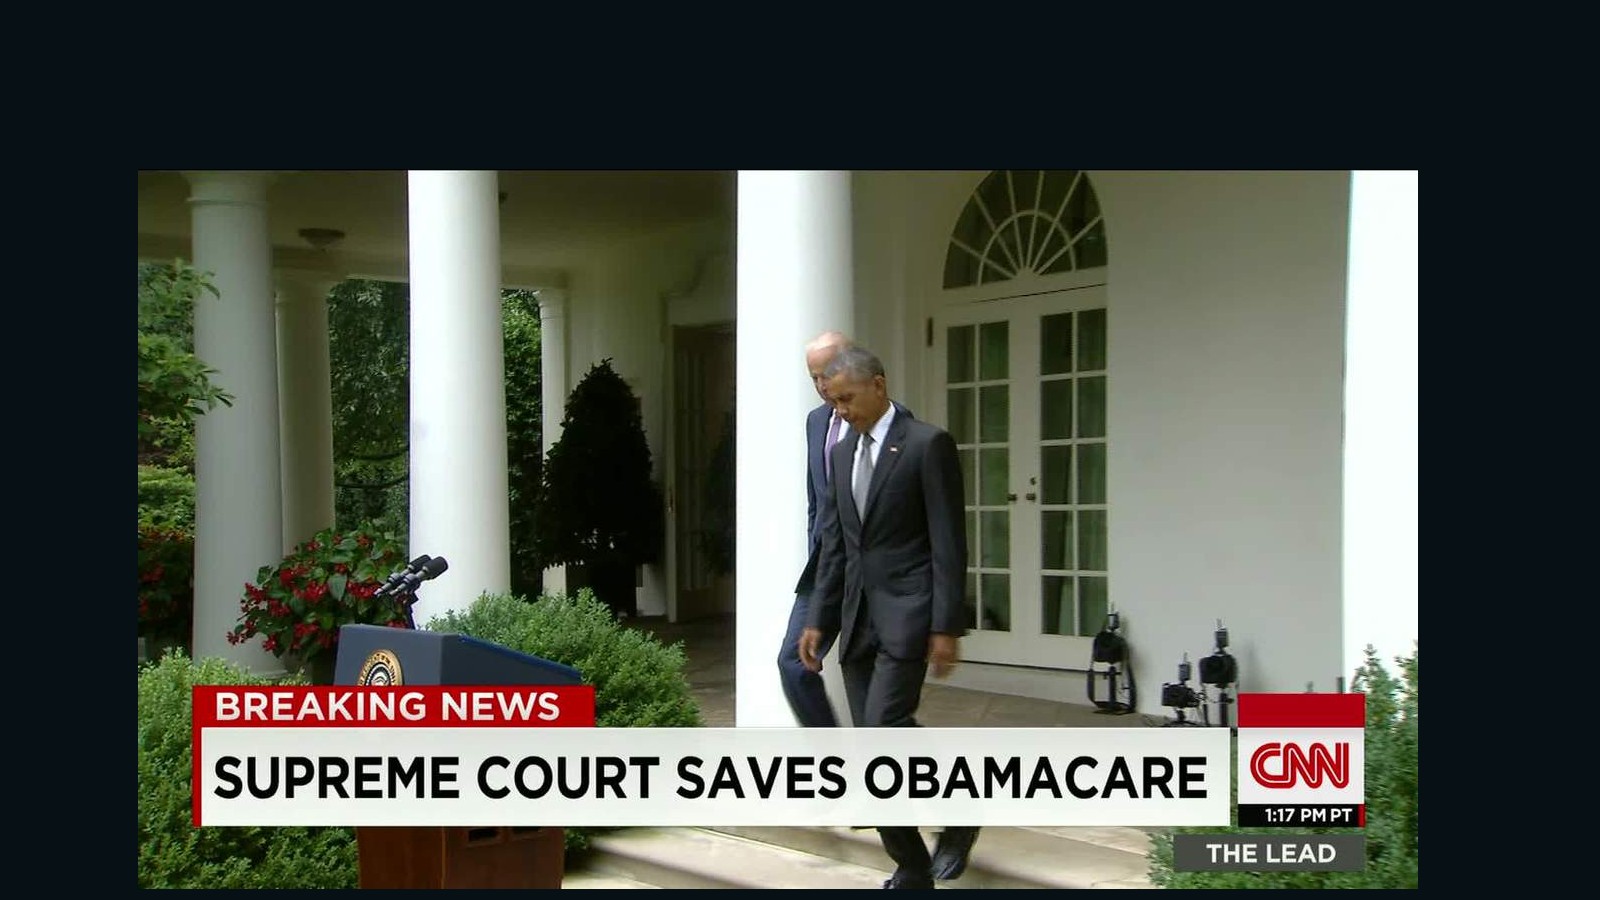 Supreme Court Saves Obamacare Gives Obama Massive Win Cnn Video 